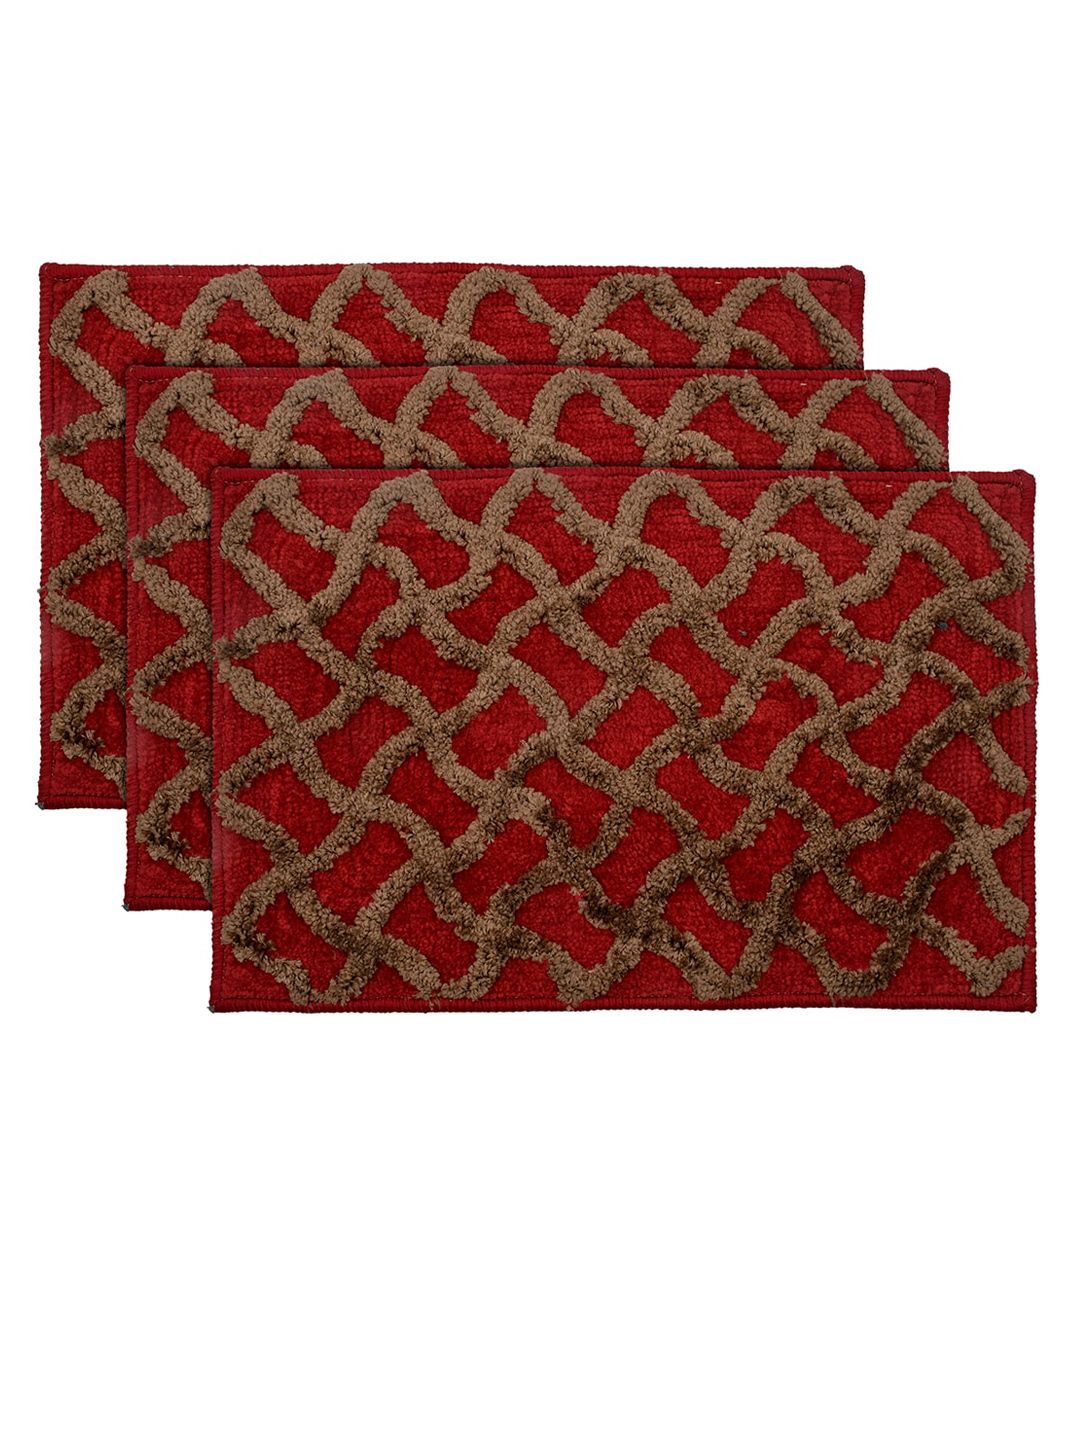 Kuber Industries Set Of 3 Maroon & Brown Textured Velvet Anti-Skid Doormats Price in India